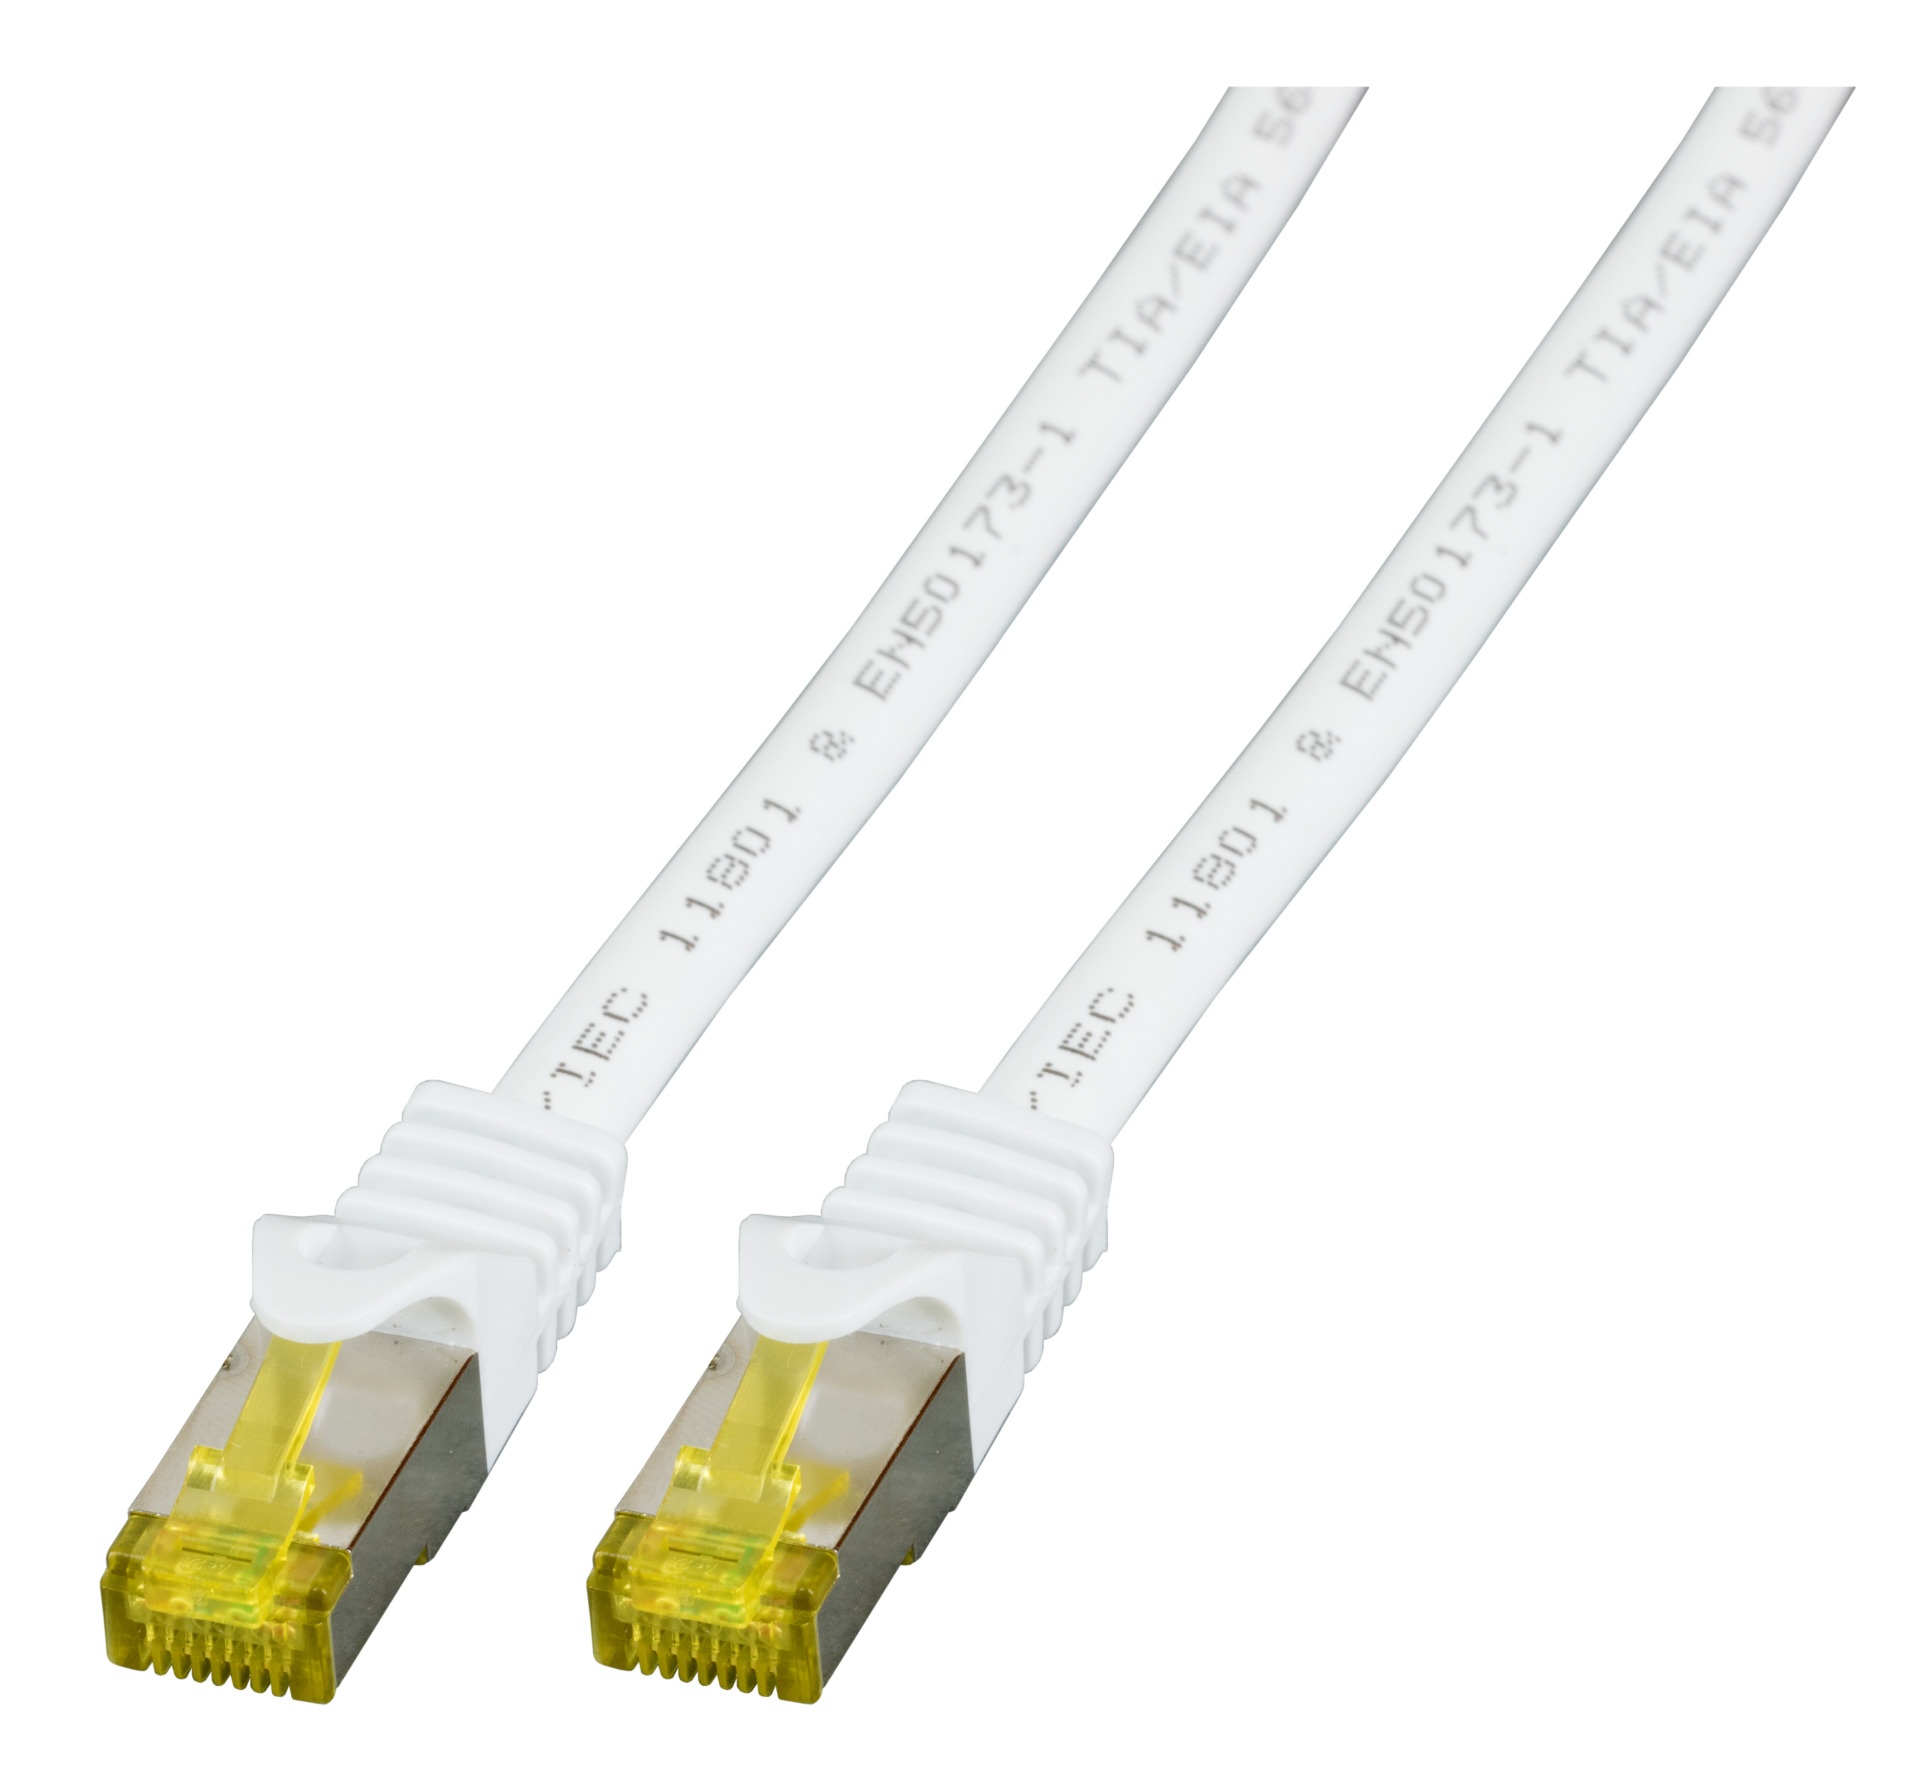 RJ45 Patch cable S/FTP, Cat.6A, LSZH, Cat.7 Raw cable, 1m, white